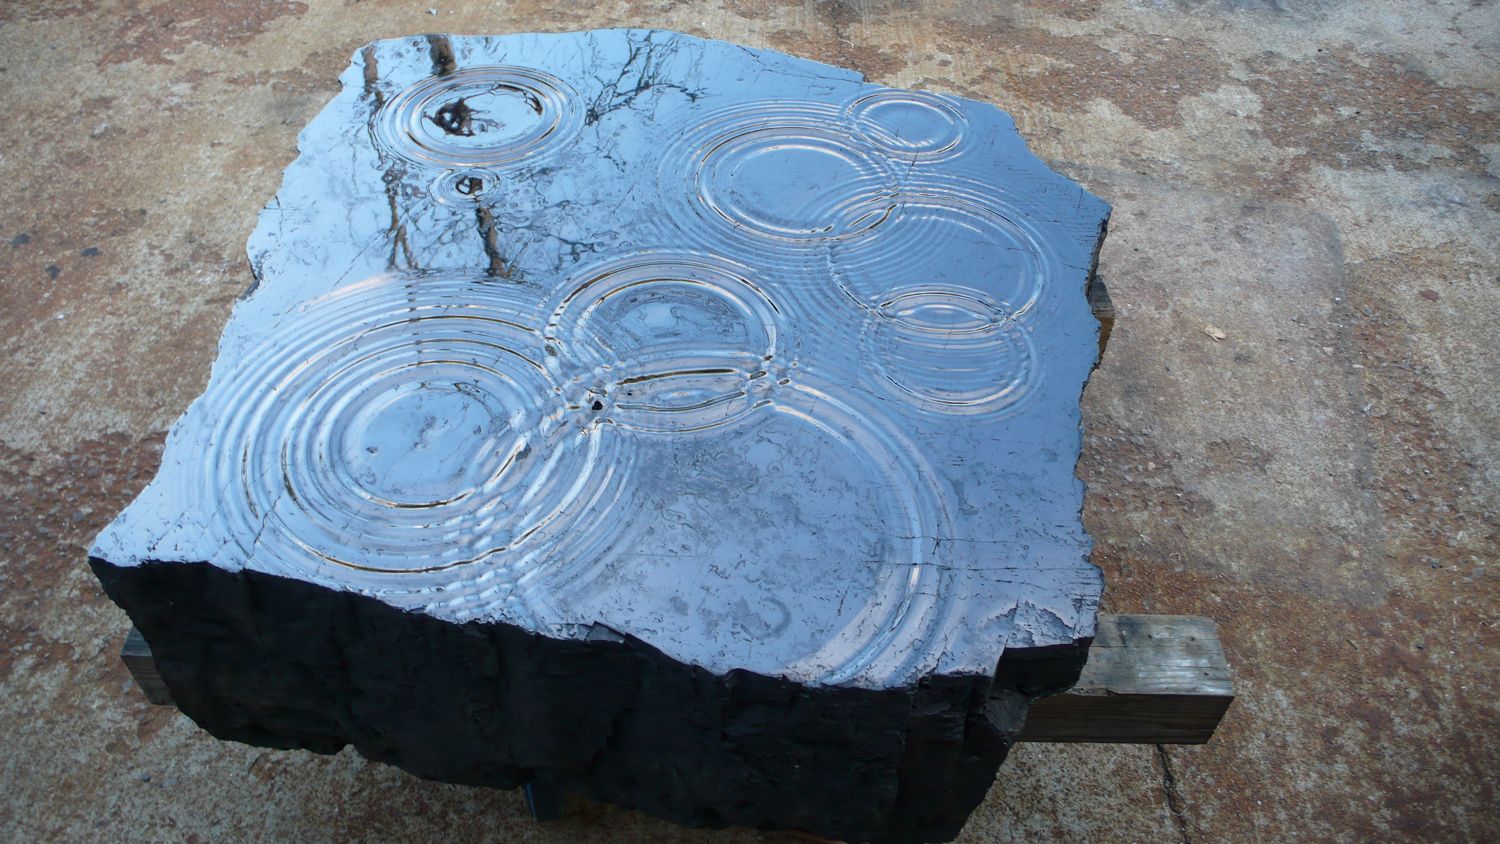 Carbon Mirror ripples, coal, 33"x35"x9"